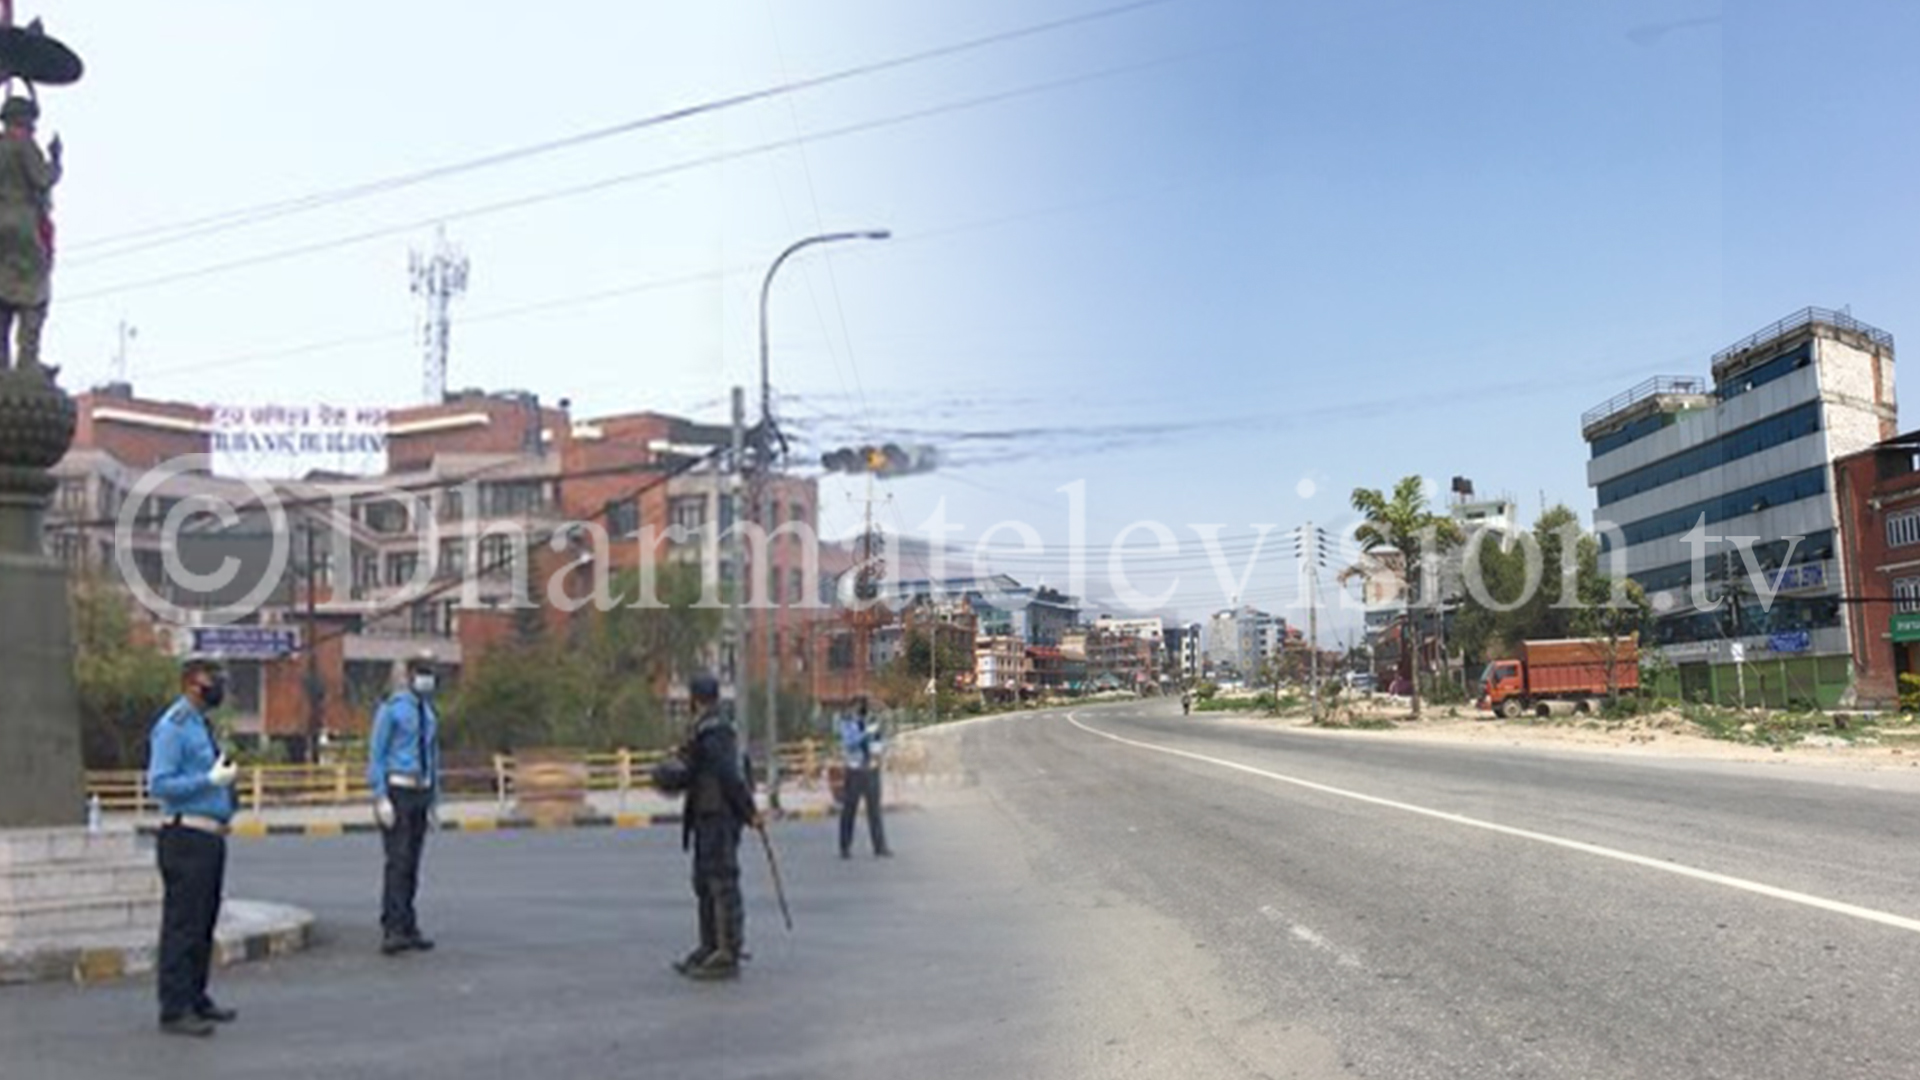 Lockdown Eased in Kathmandu - Some relief to be felt